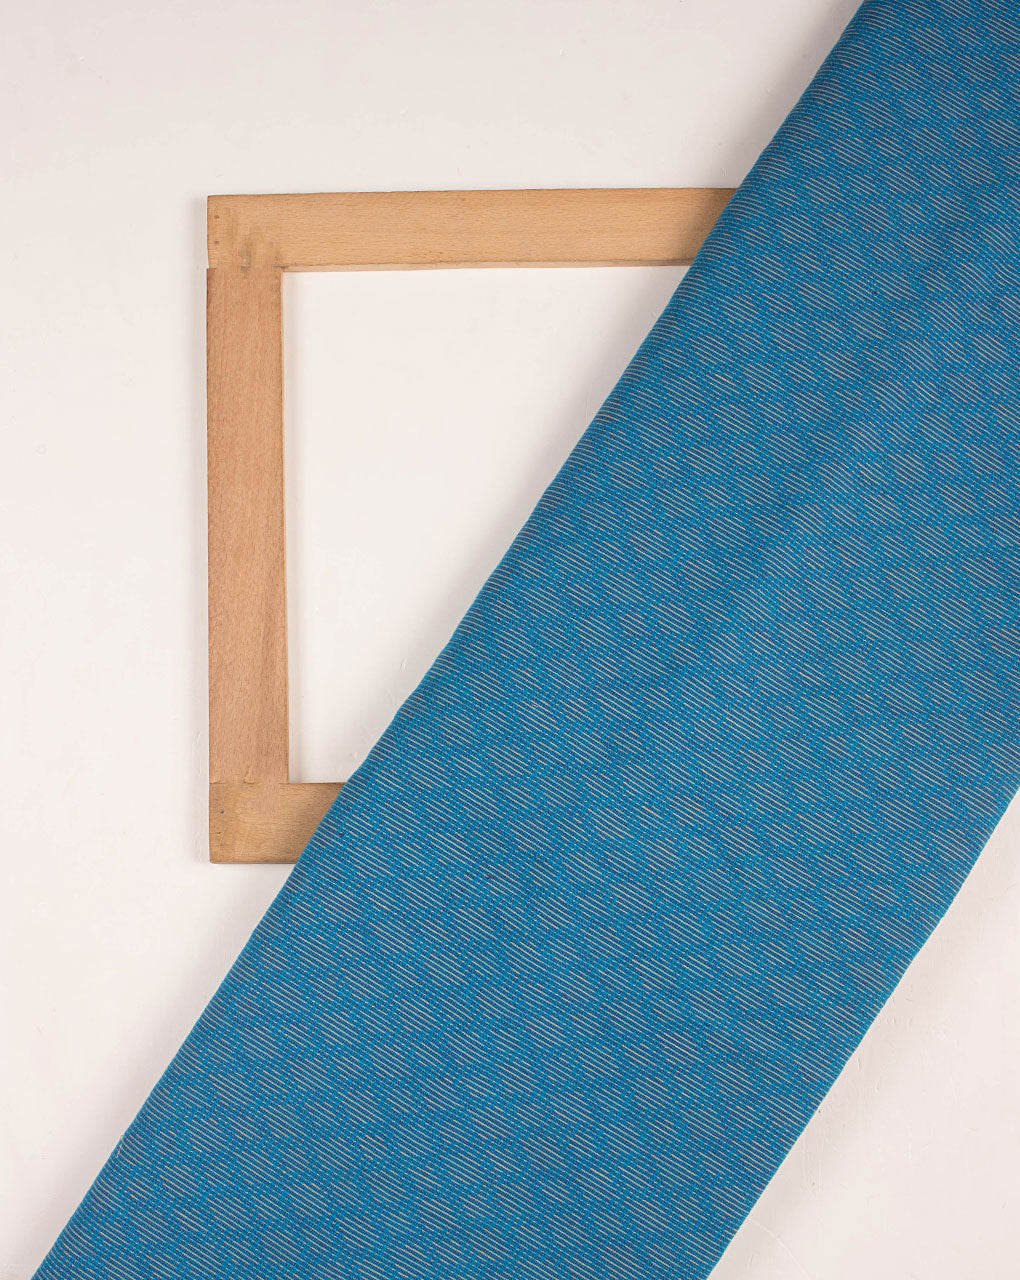 Woven Dobby Loom Textured Cotton Fabric - Fabriclore.com